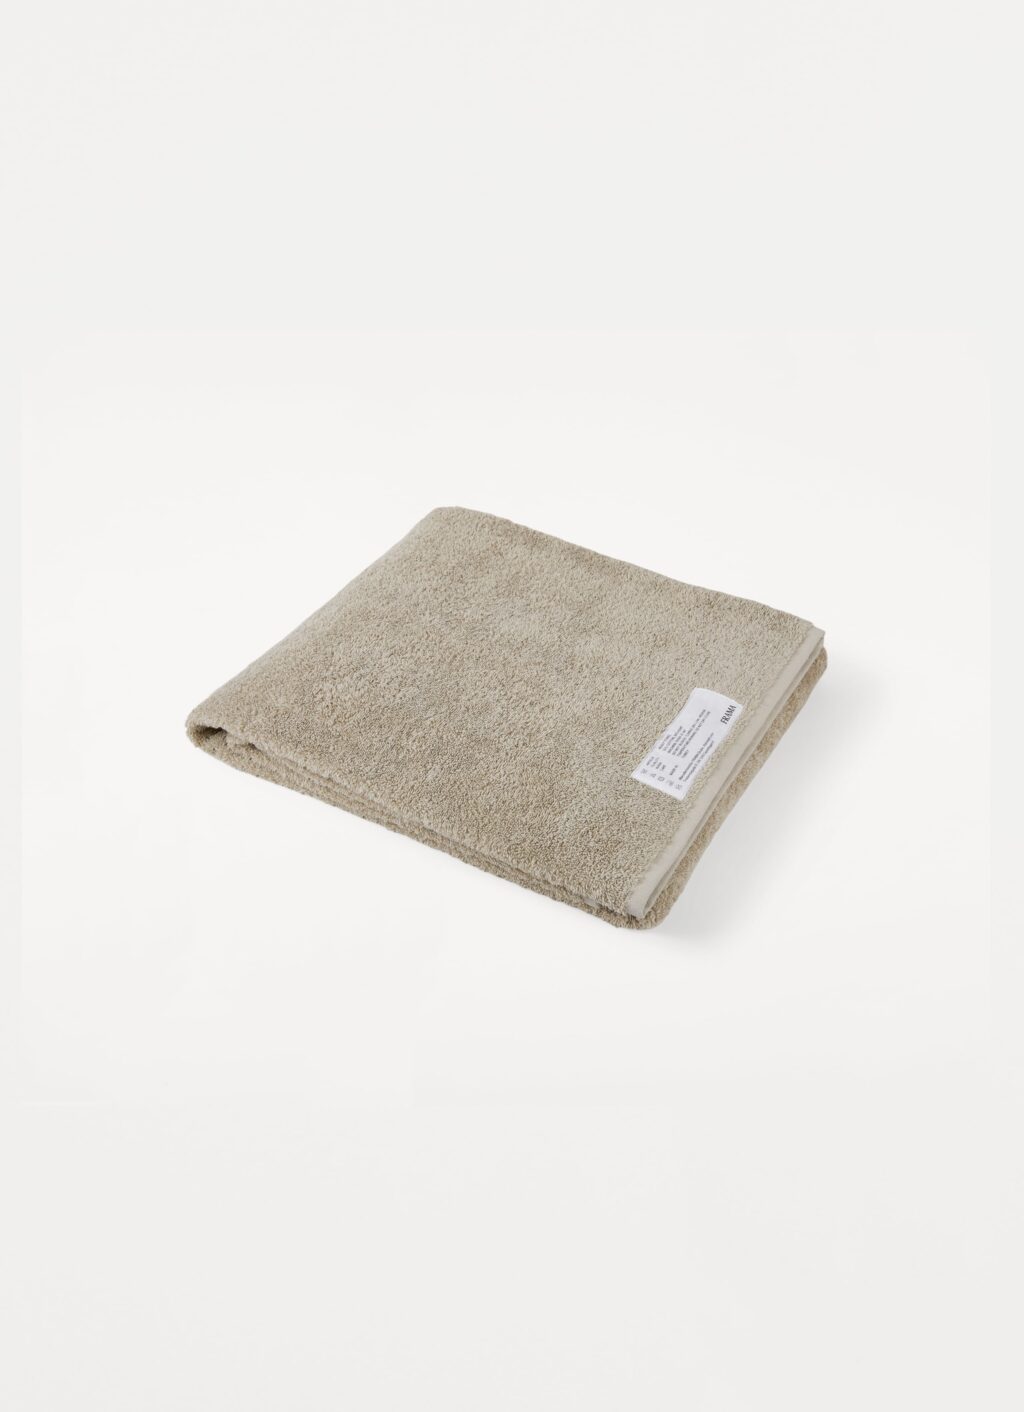 Frama - Heavy Towel - Sage Green - Bath Sheet